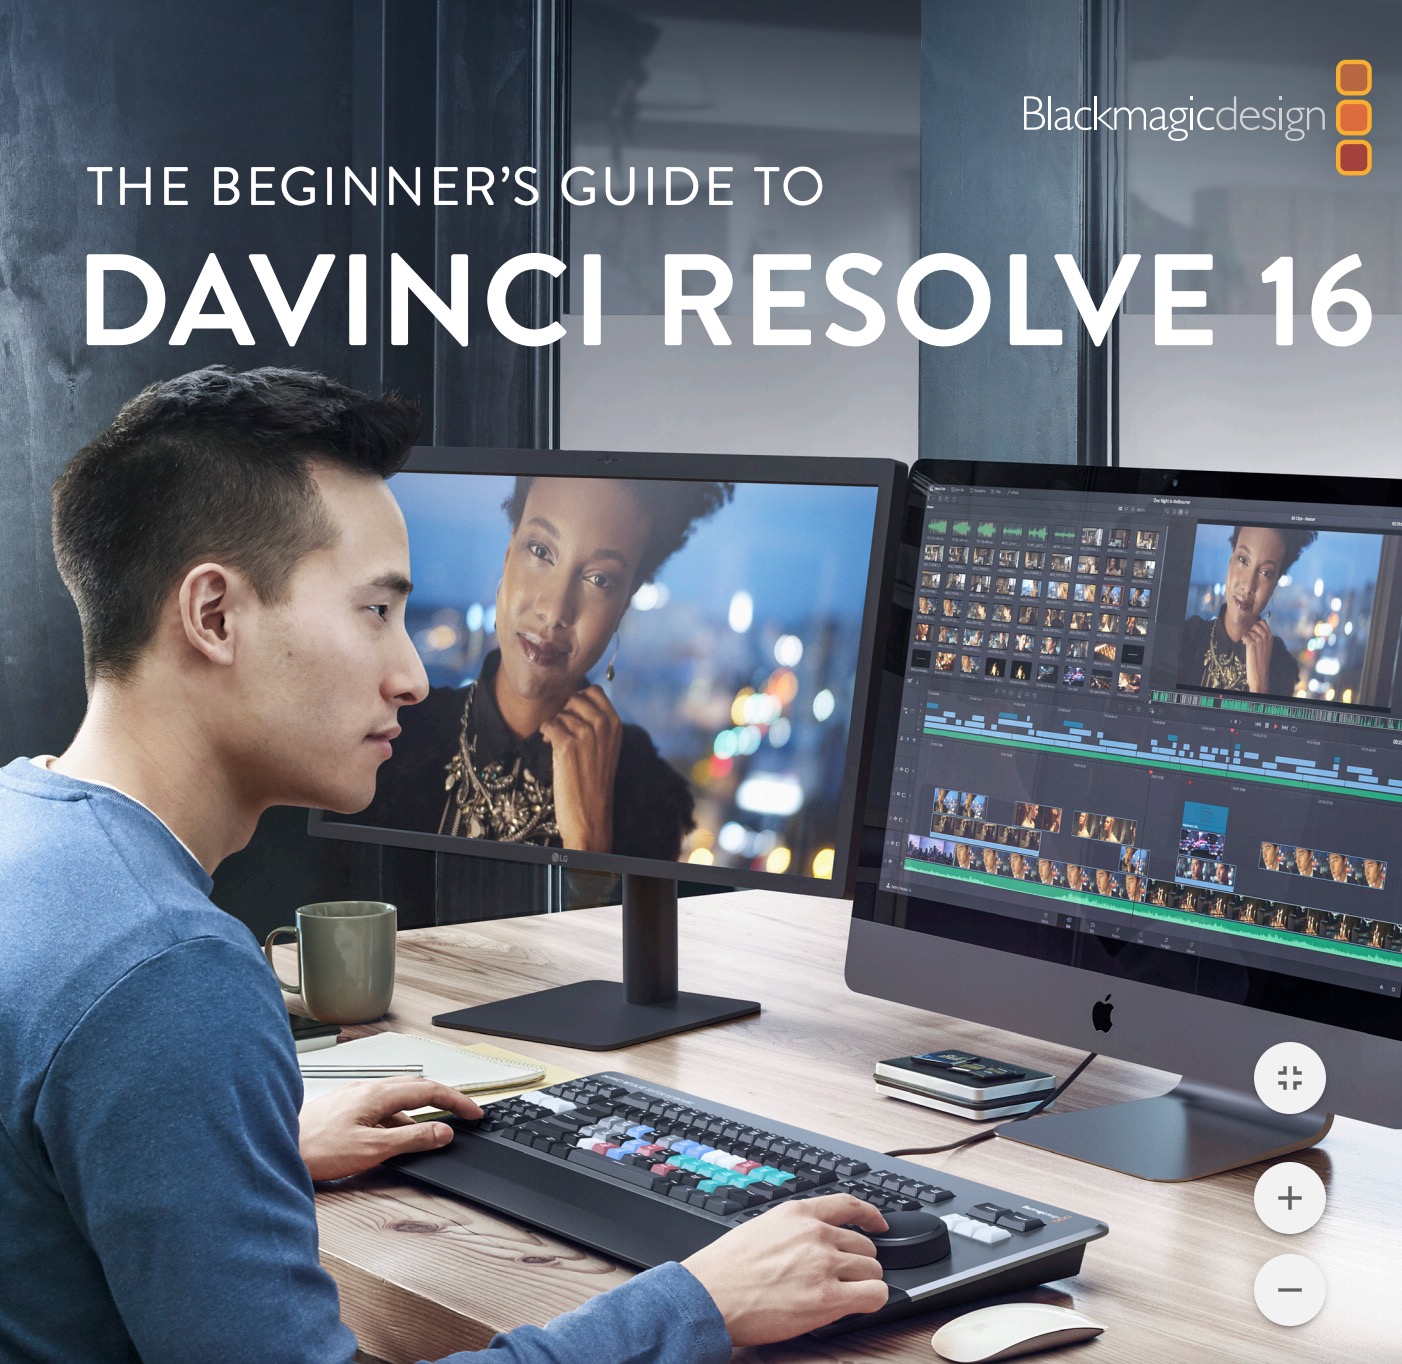 davinci resolve free download 16